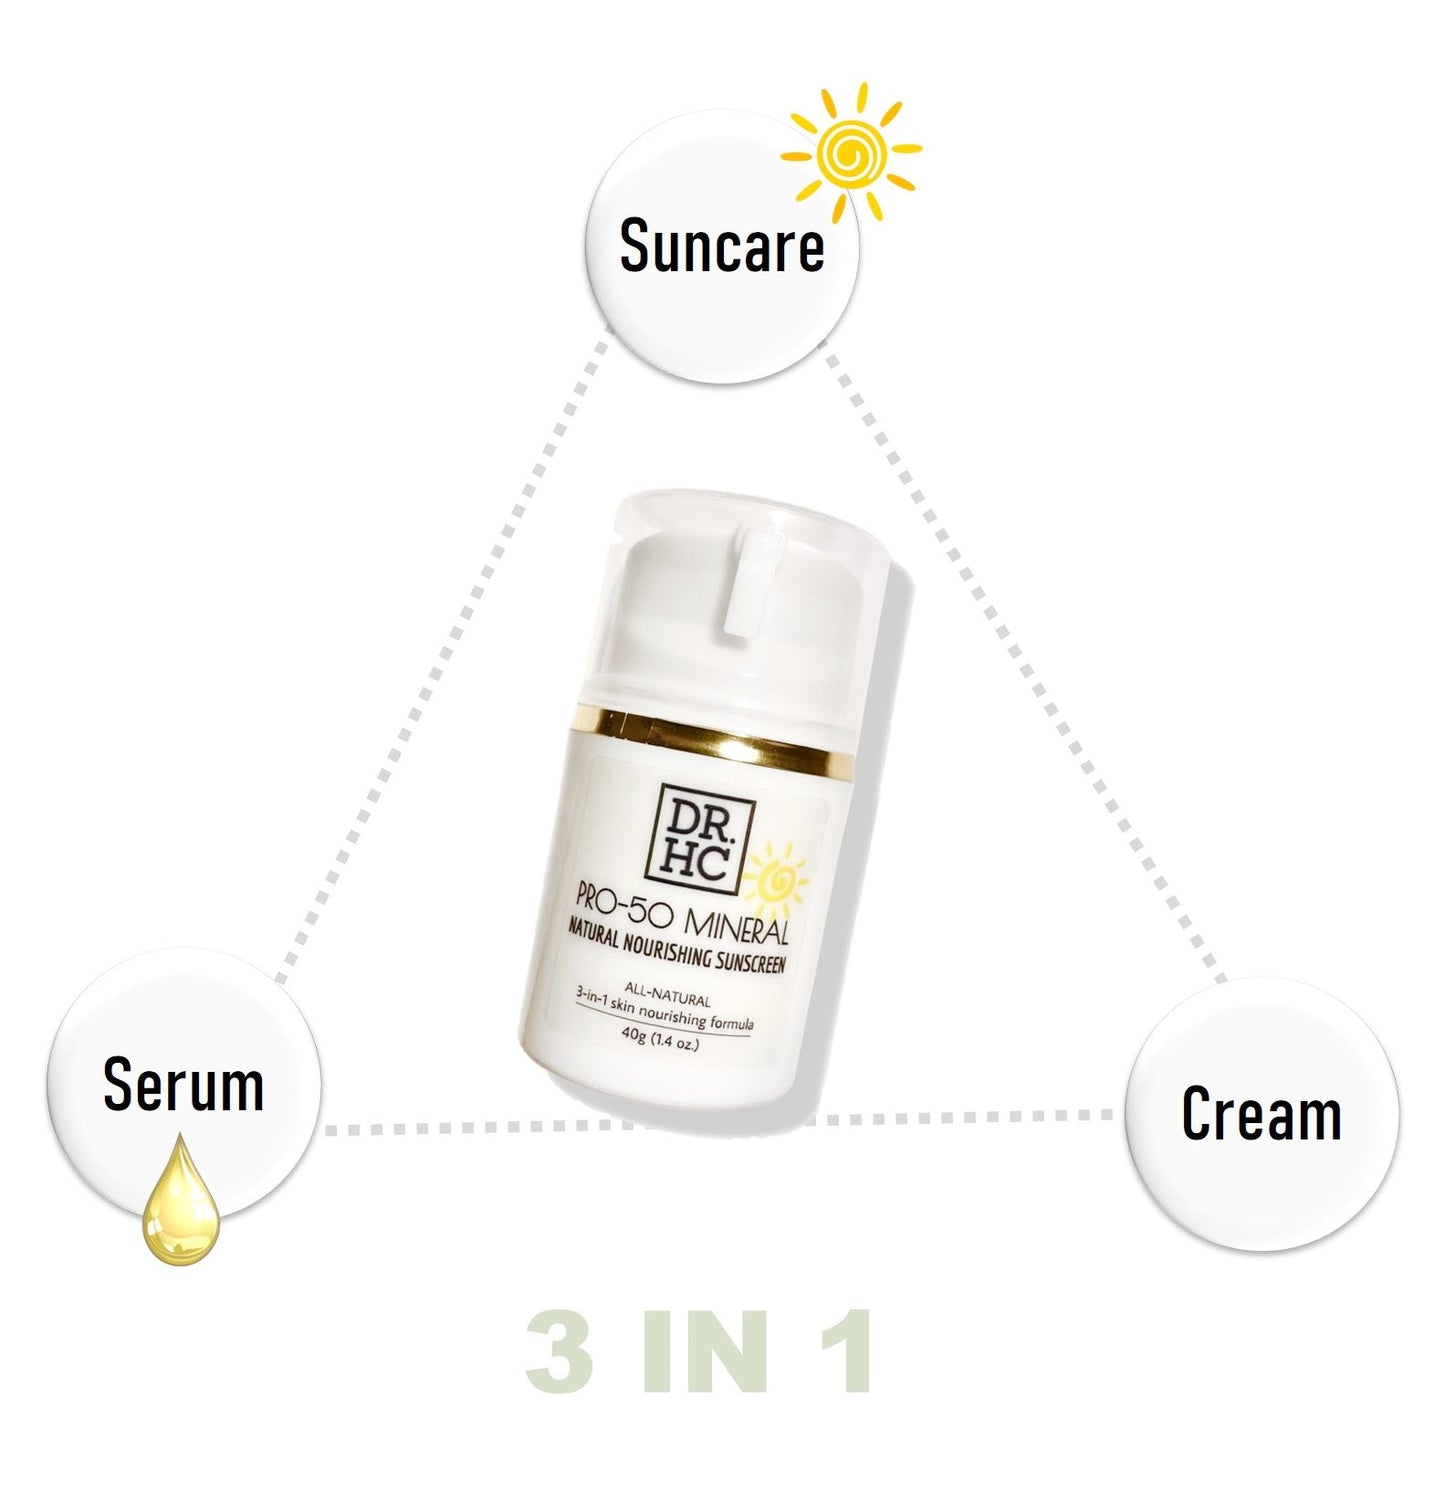 DR.HC Pro-50 Mineral Natural Nourishing Sunscreen (40g, 1.4oz.) (Natural UV Care, Skin brightening, Anti-aging, Damage Repair, Anti-inflammatory...)-4